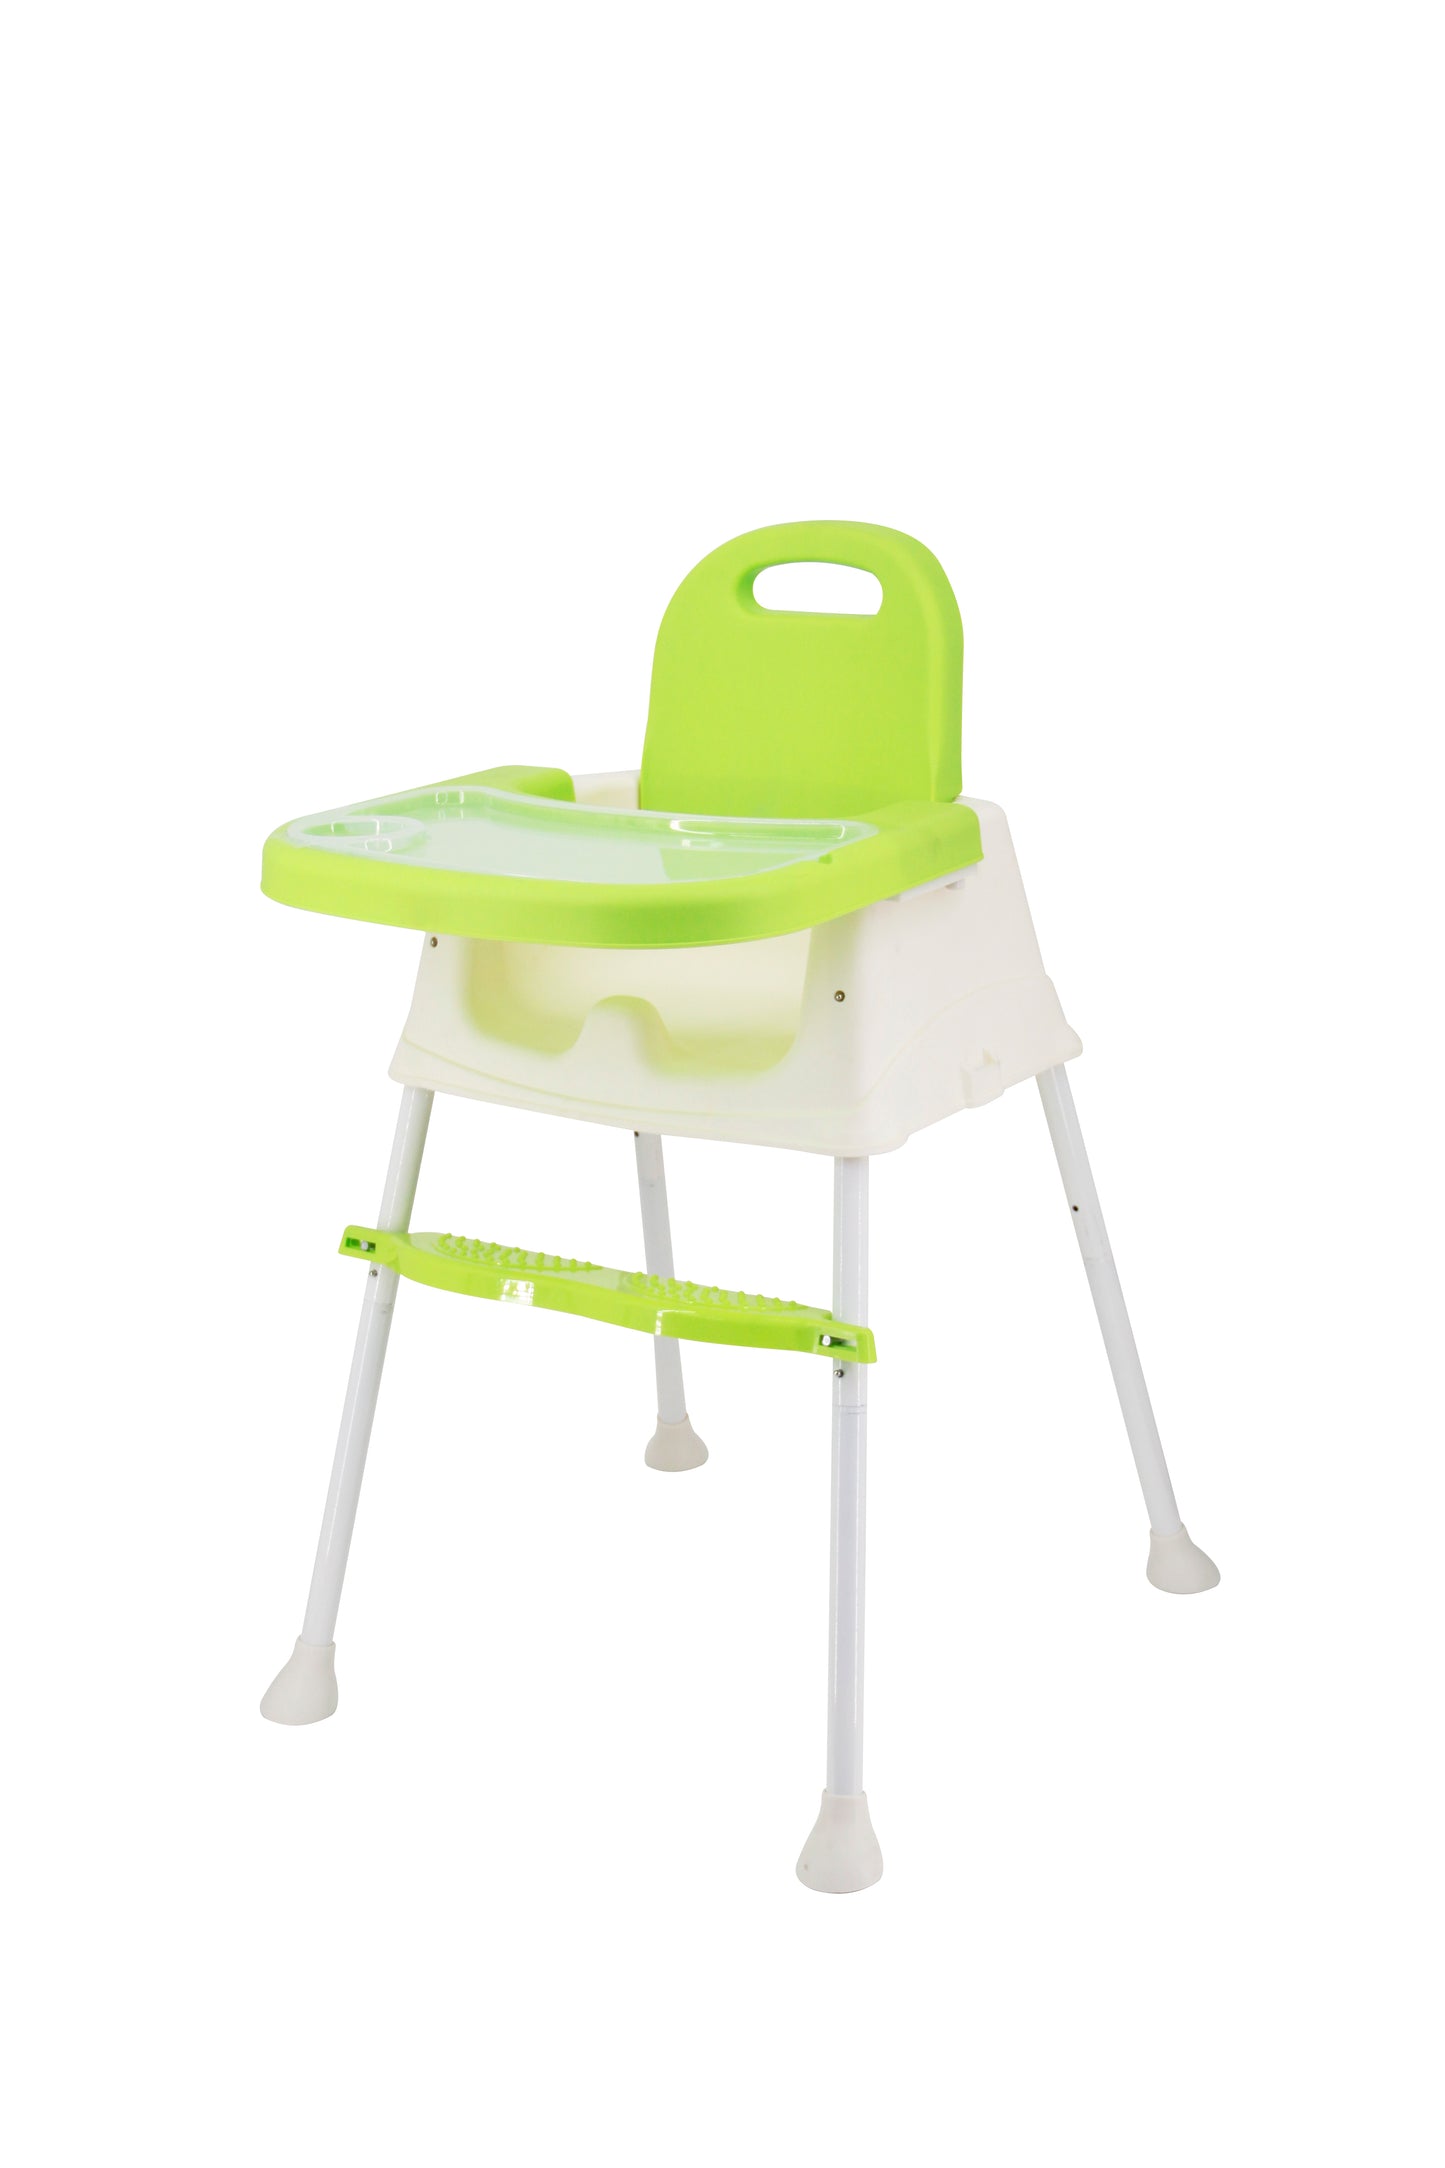 Cheap Baby Feeding Chair Children Table and Chairs Baby High Chair Dinner High Chair